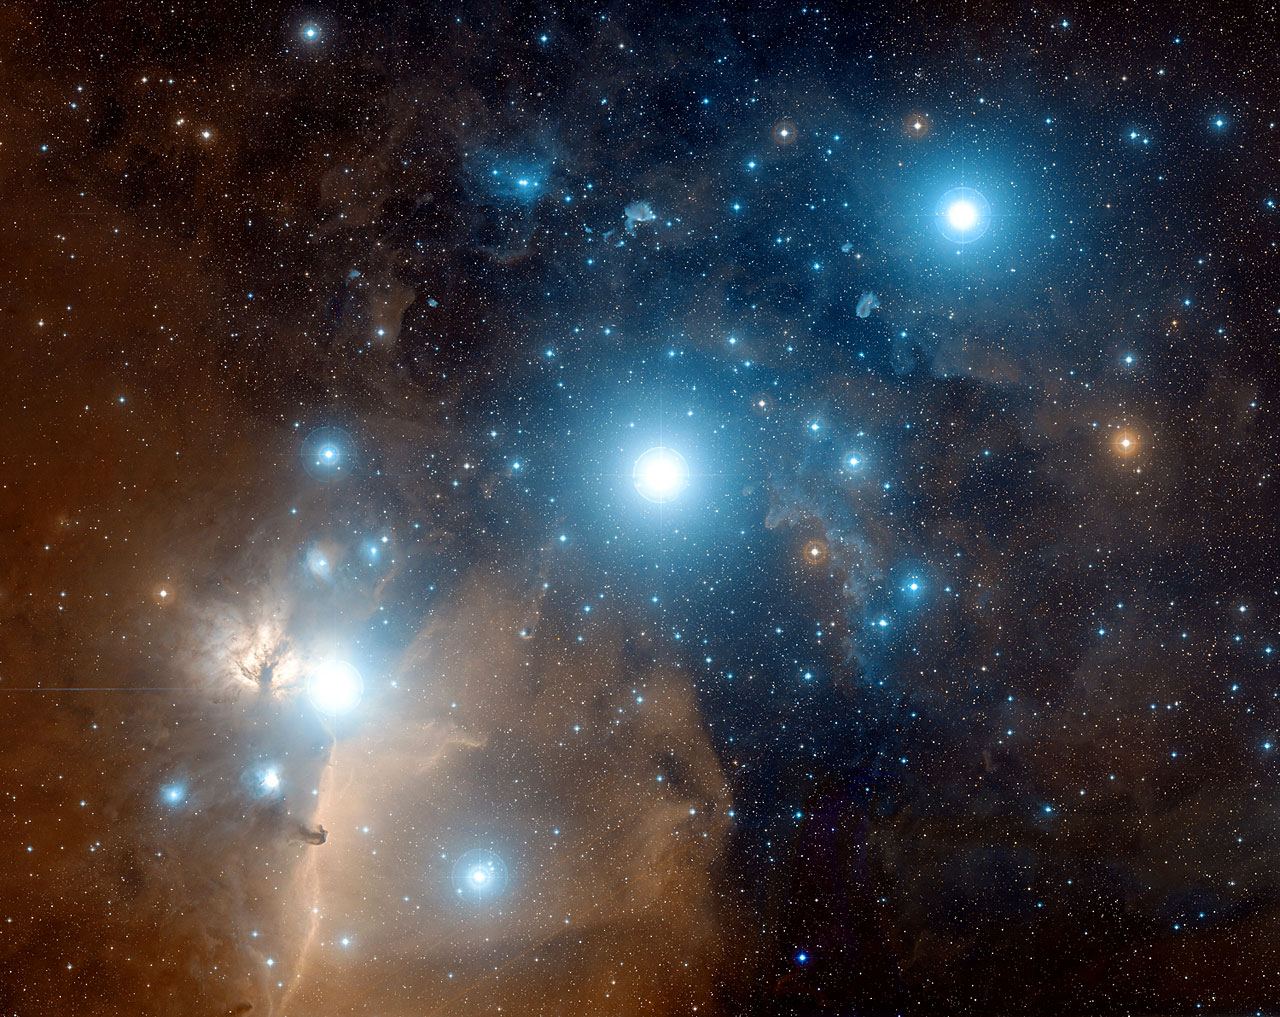 http://www.spacetelescope.org/static/archives/fitsimages/screen/davidedemartin_12.jpg